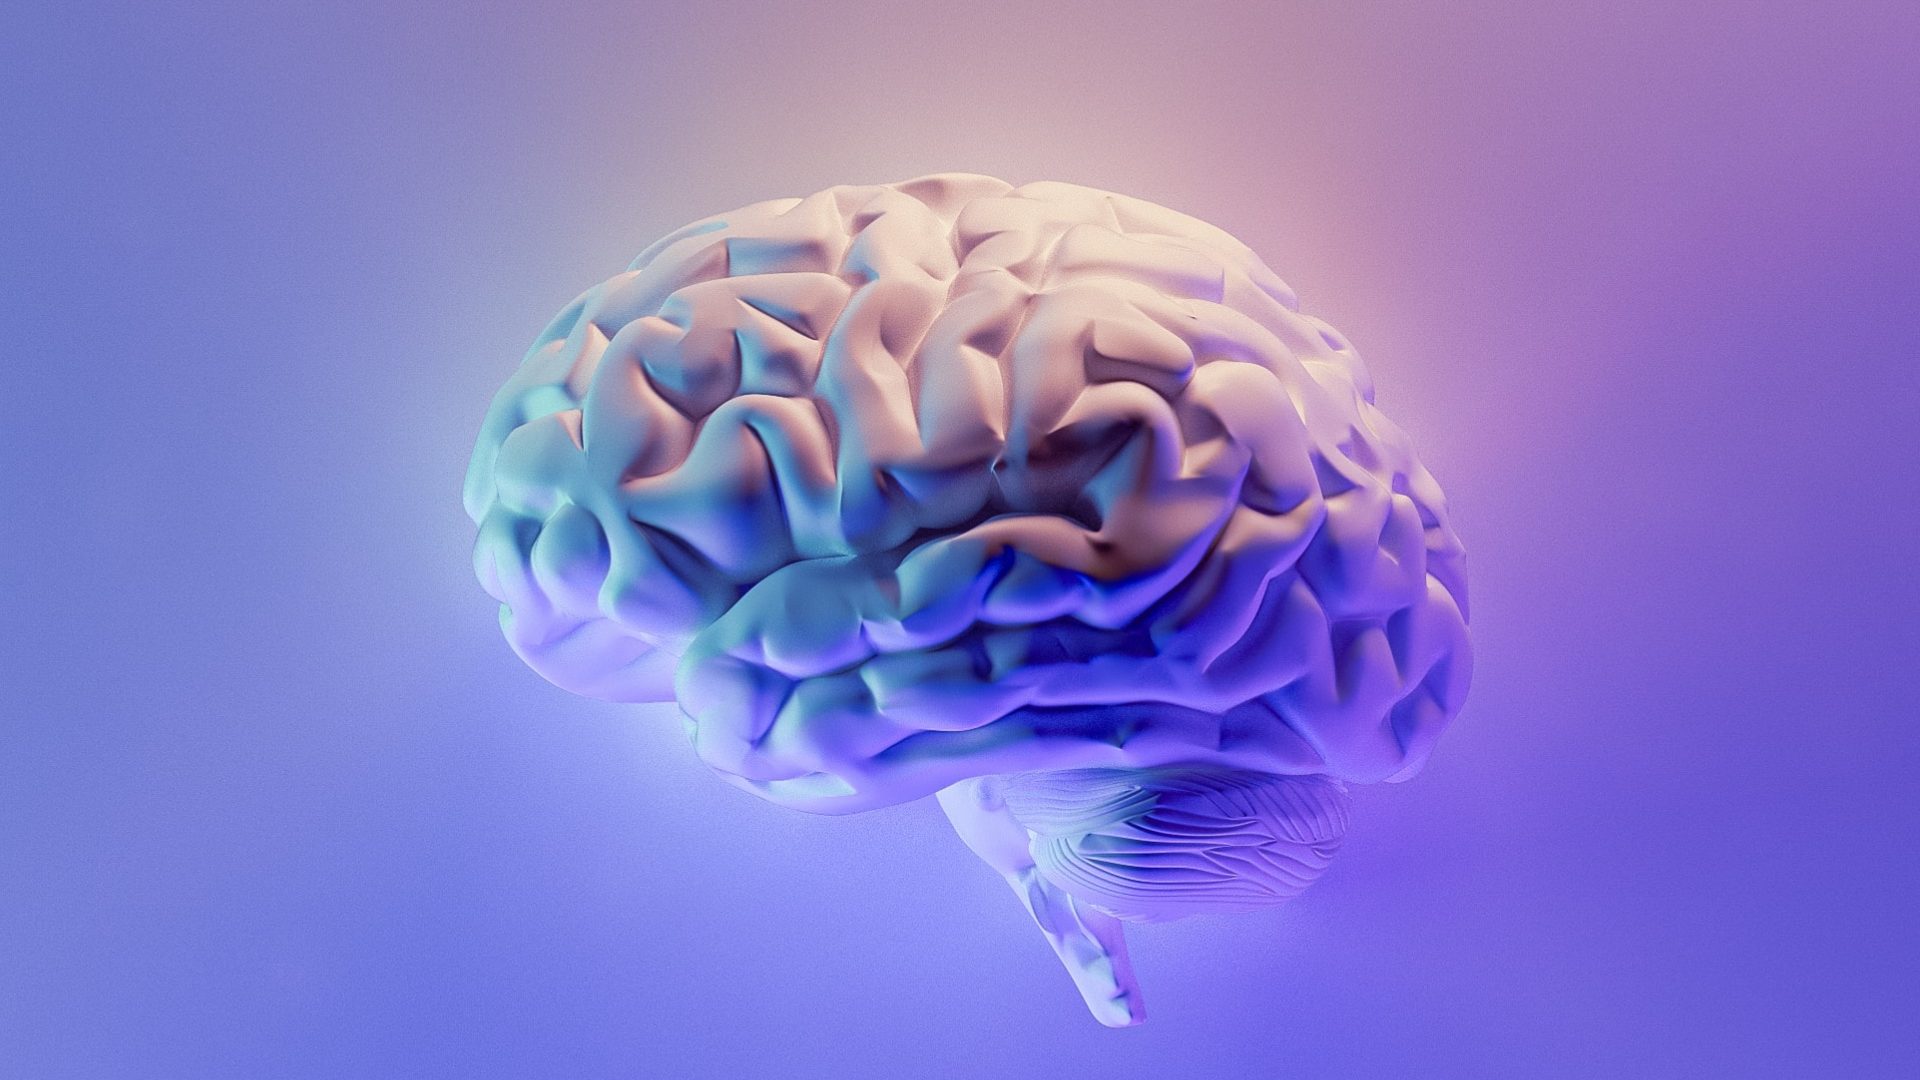 Las enfermedades neurodegenerativas atacan el cerebro e impiden producir neuronas sanas